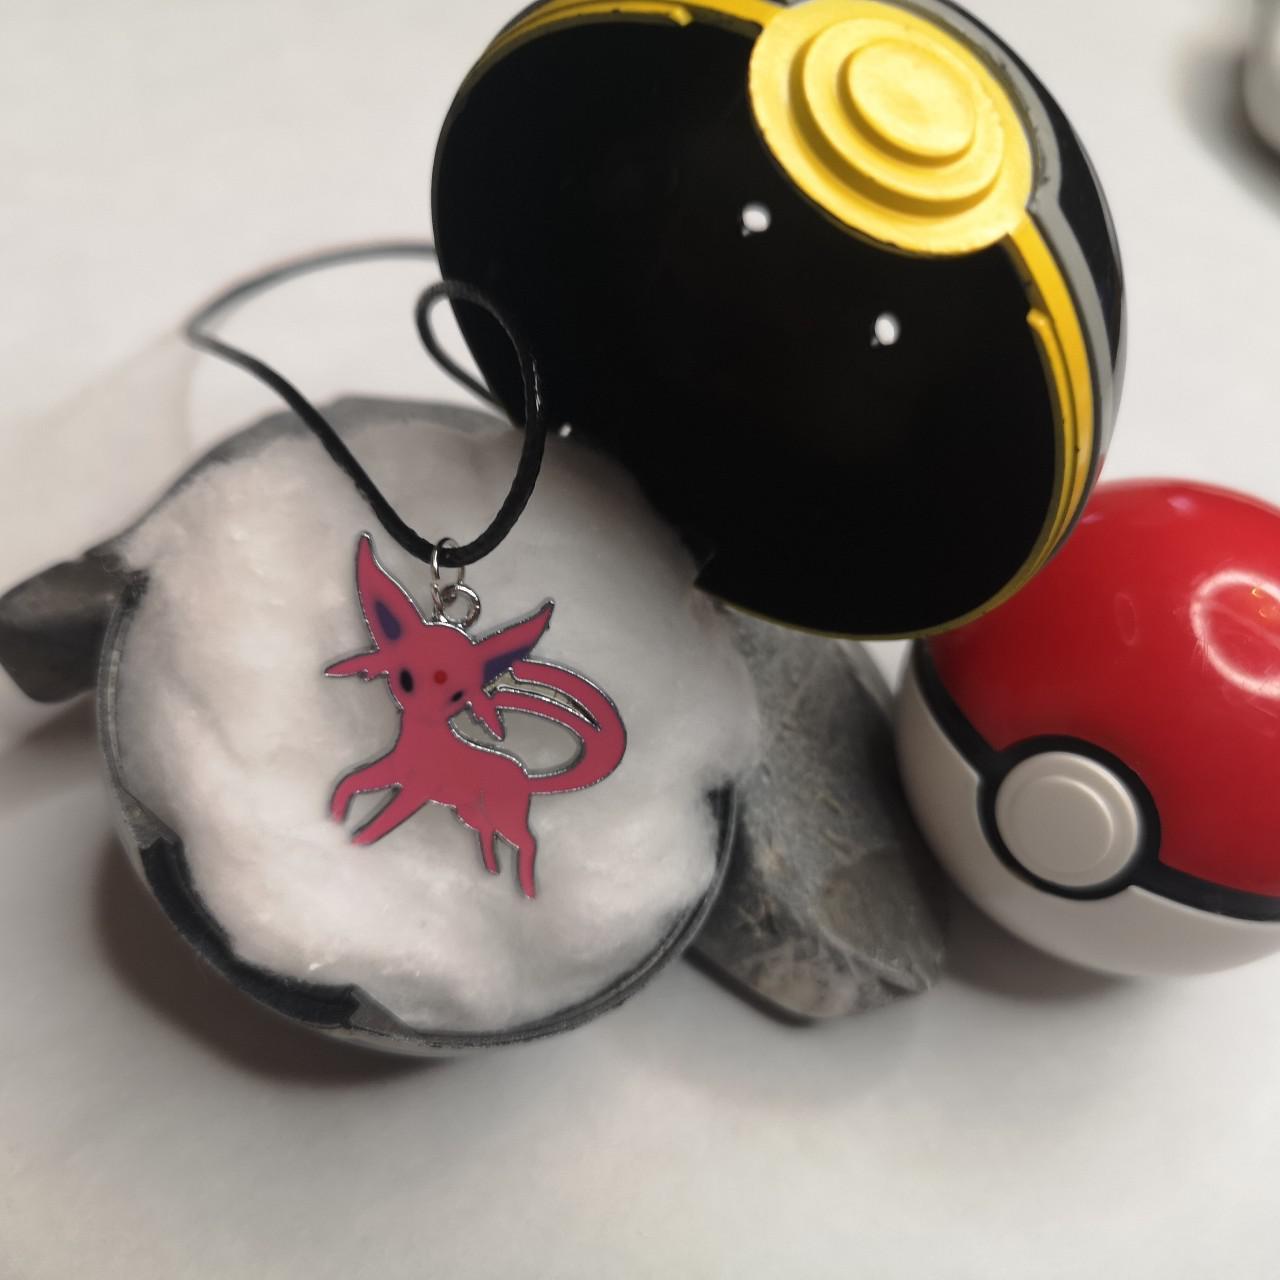 Product Image 2 - Espeon Pendant Pokemon Pendant Necklace
Customise